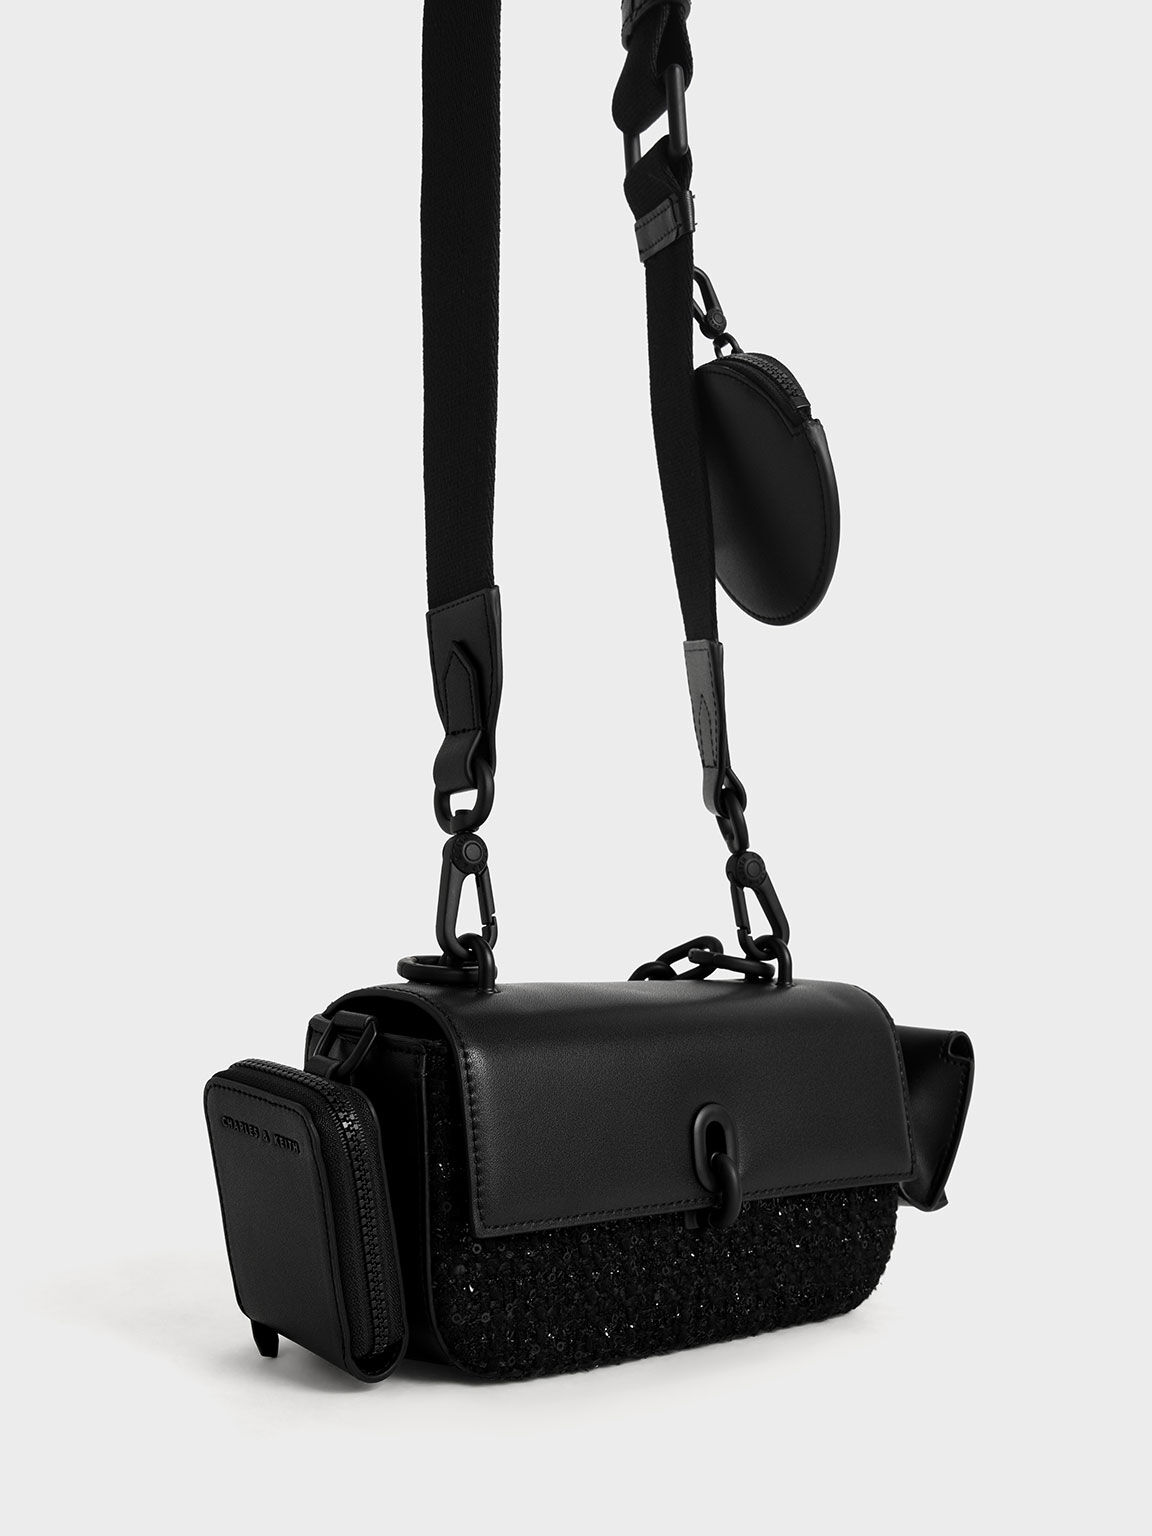 Wren Acrylic Chain Handle Tweed Bag, Black, hi-res